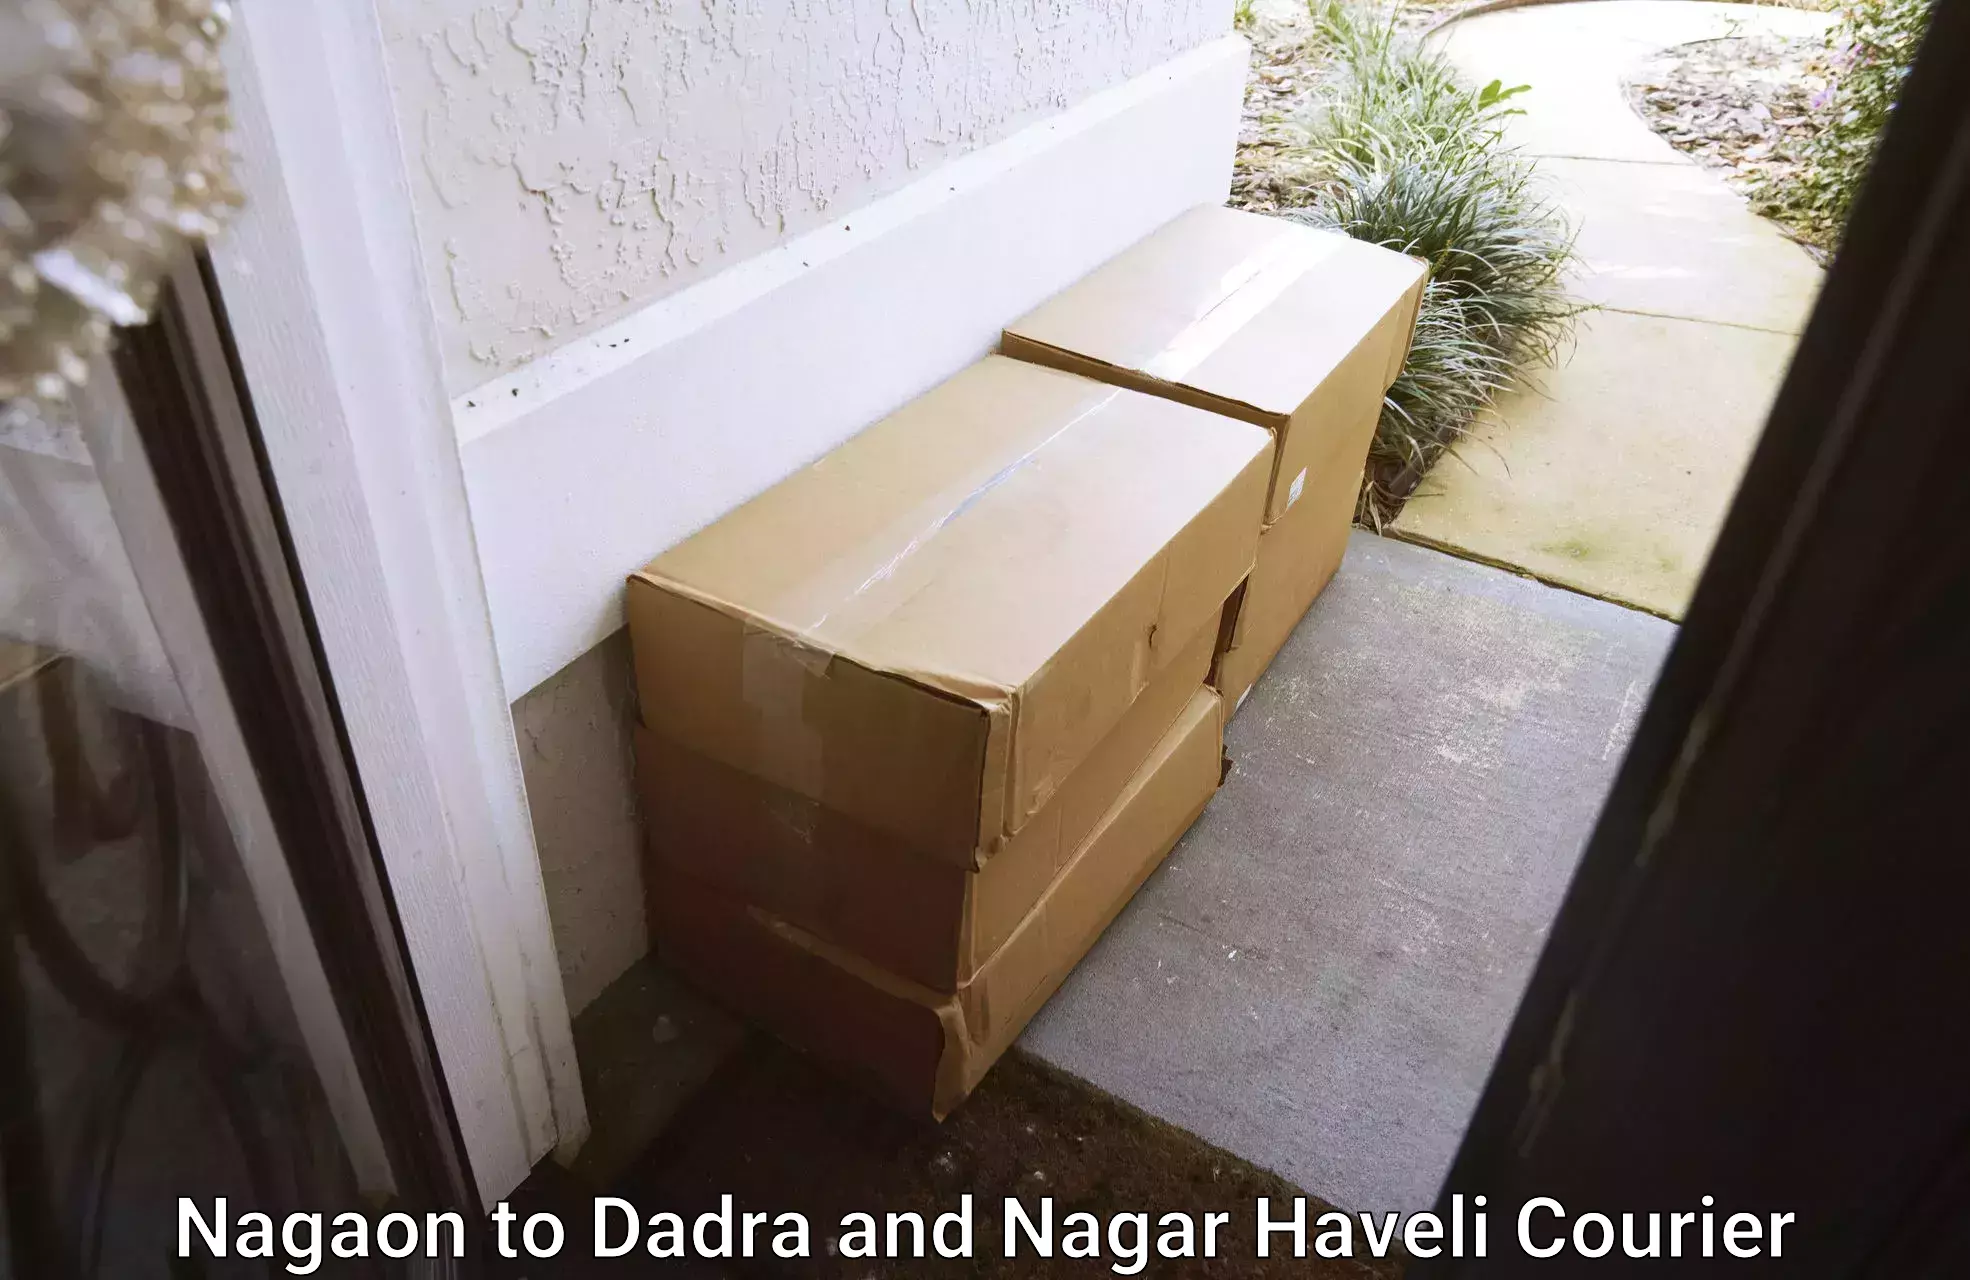 Professional parcel services Nagaon to Silvassa